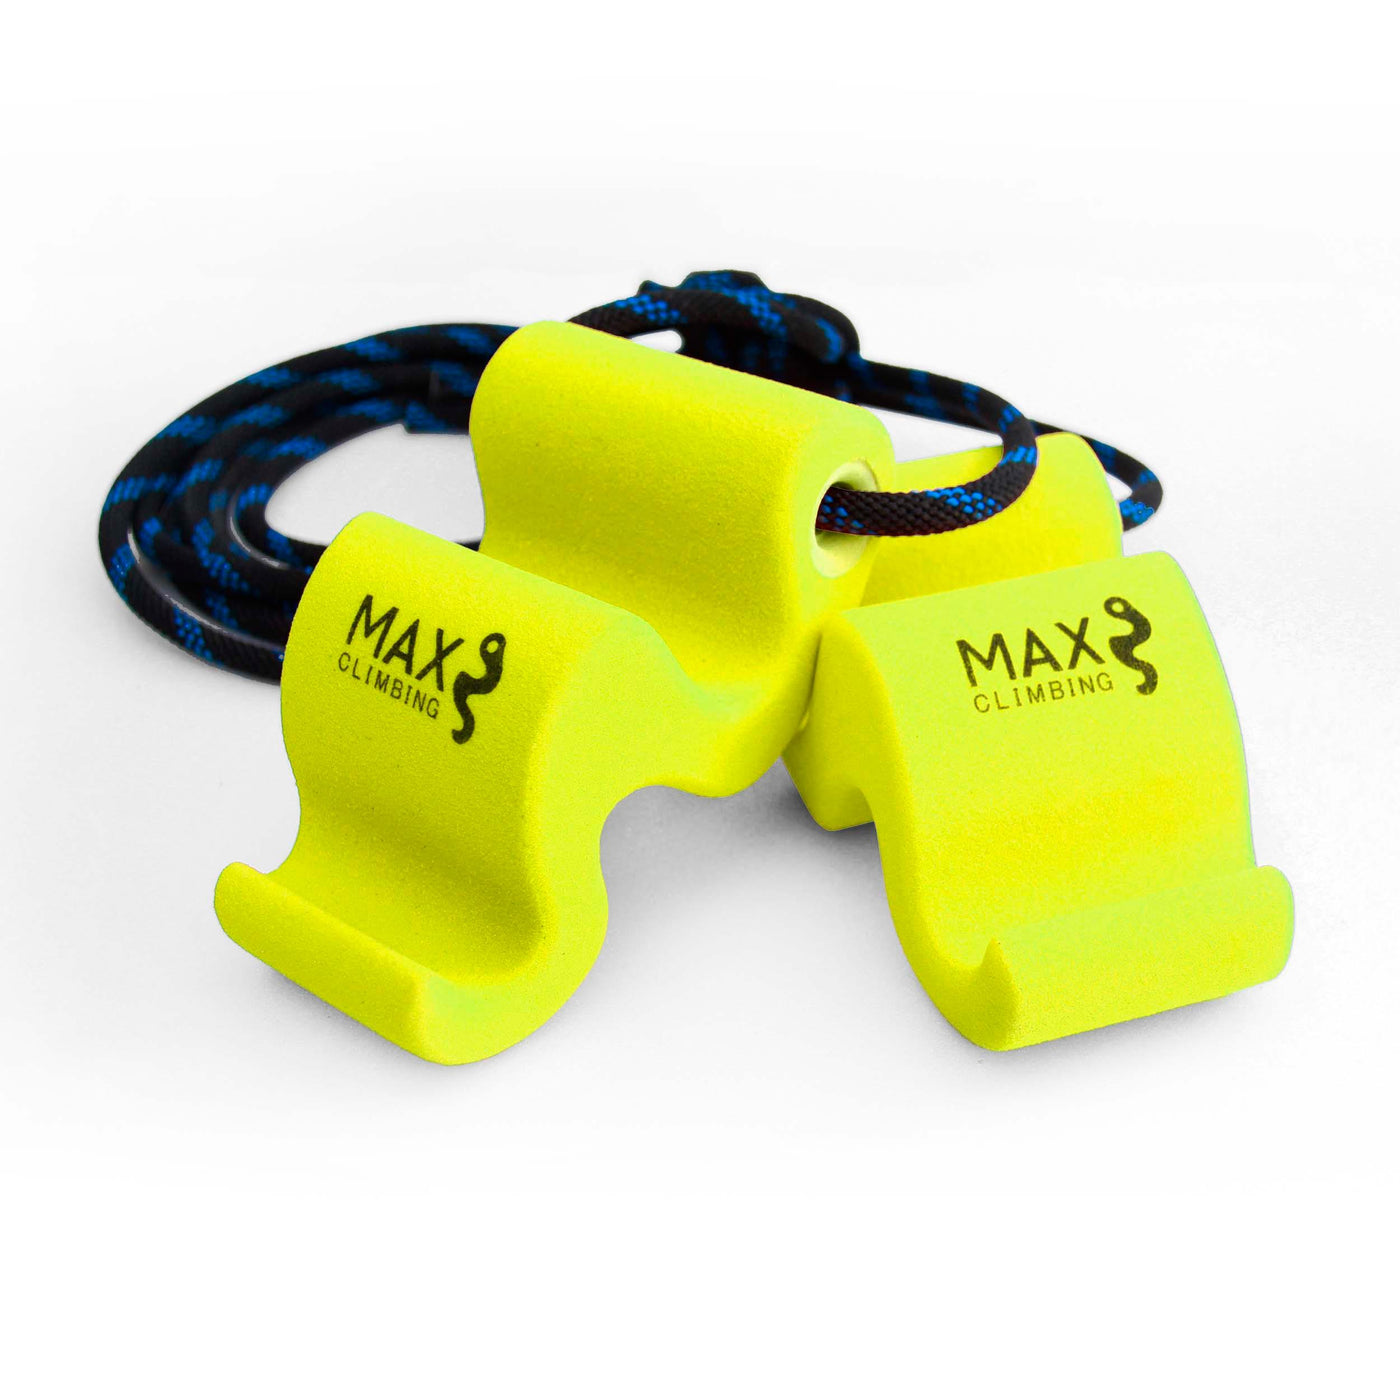 Maxgrip - Max Climbing - training tool - climbing yellow